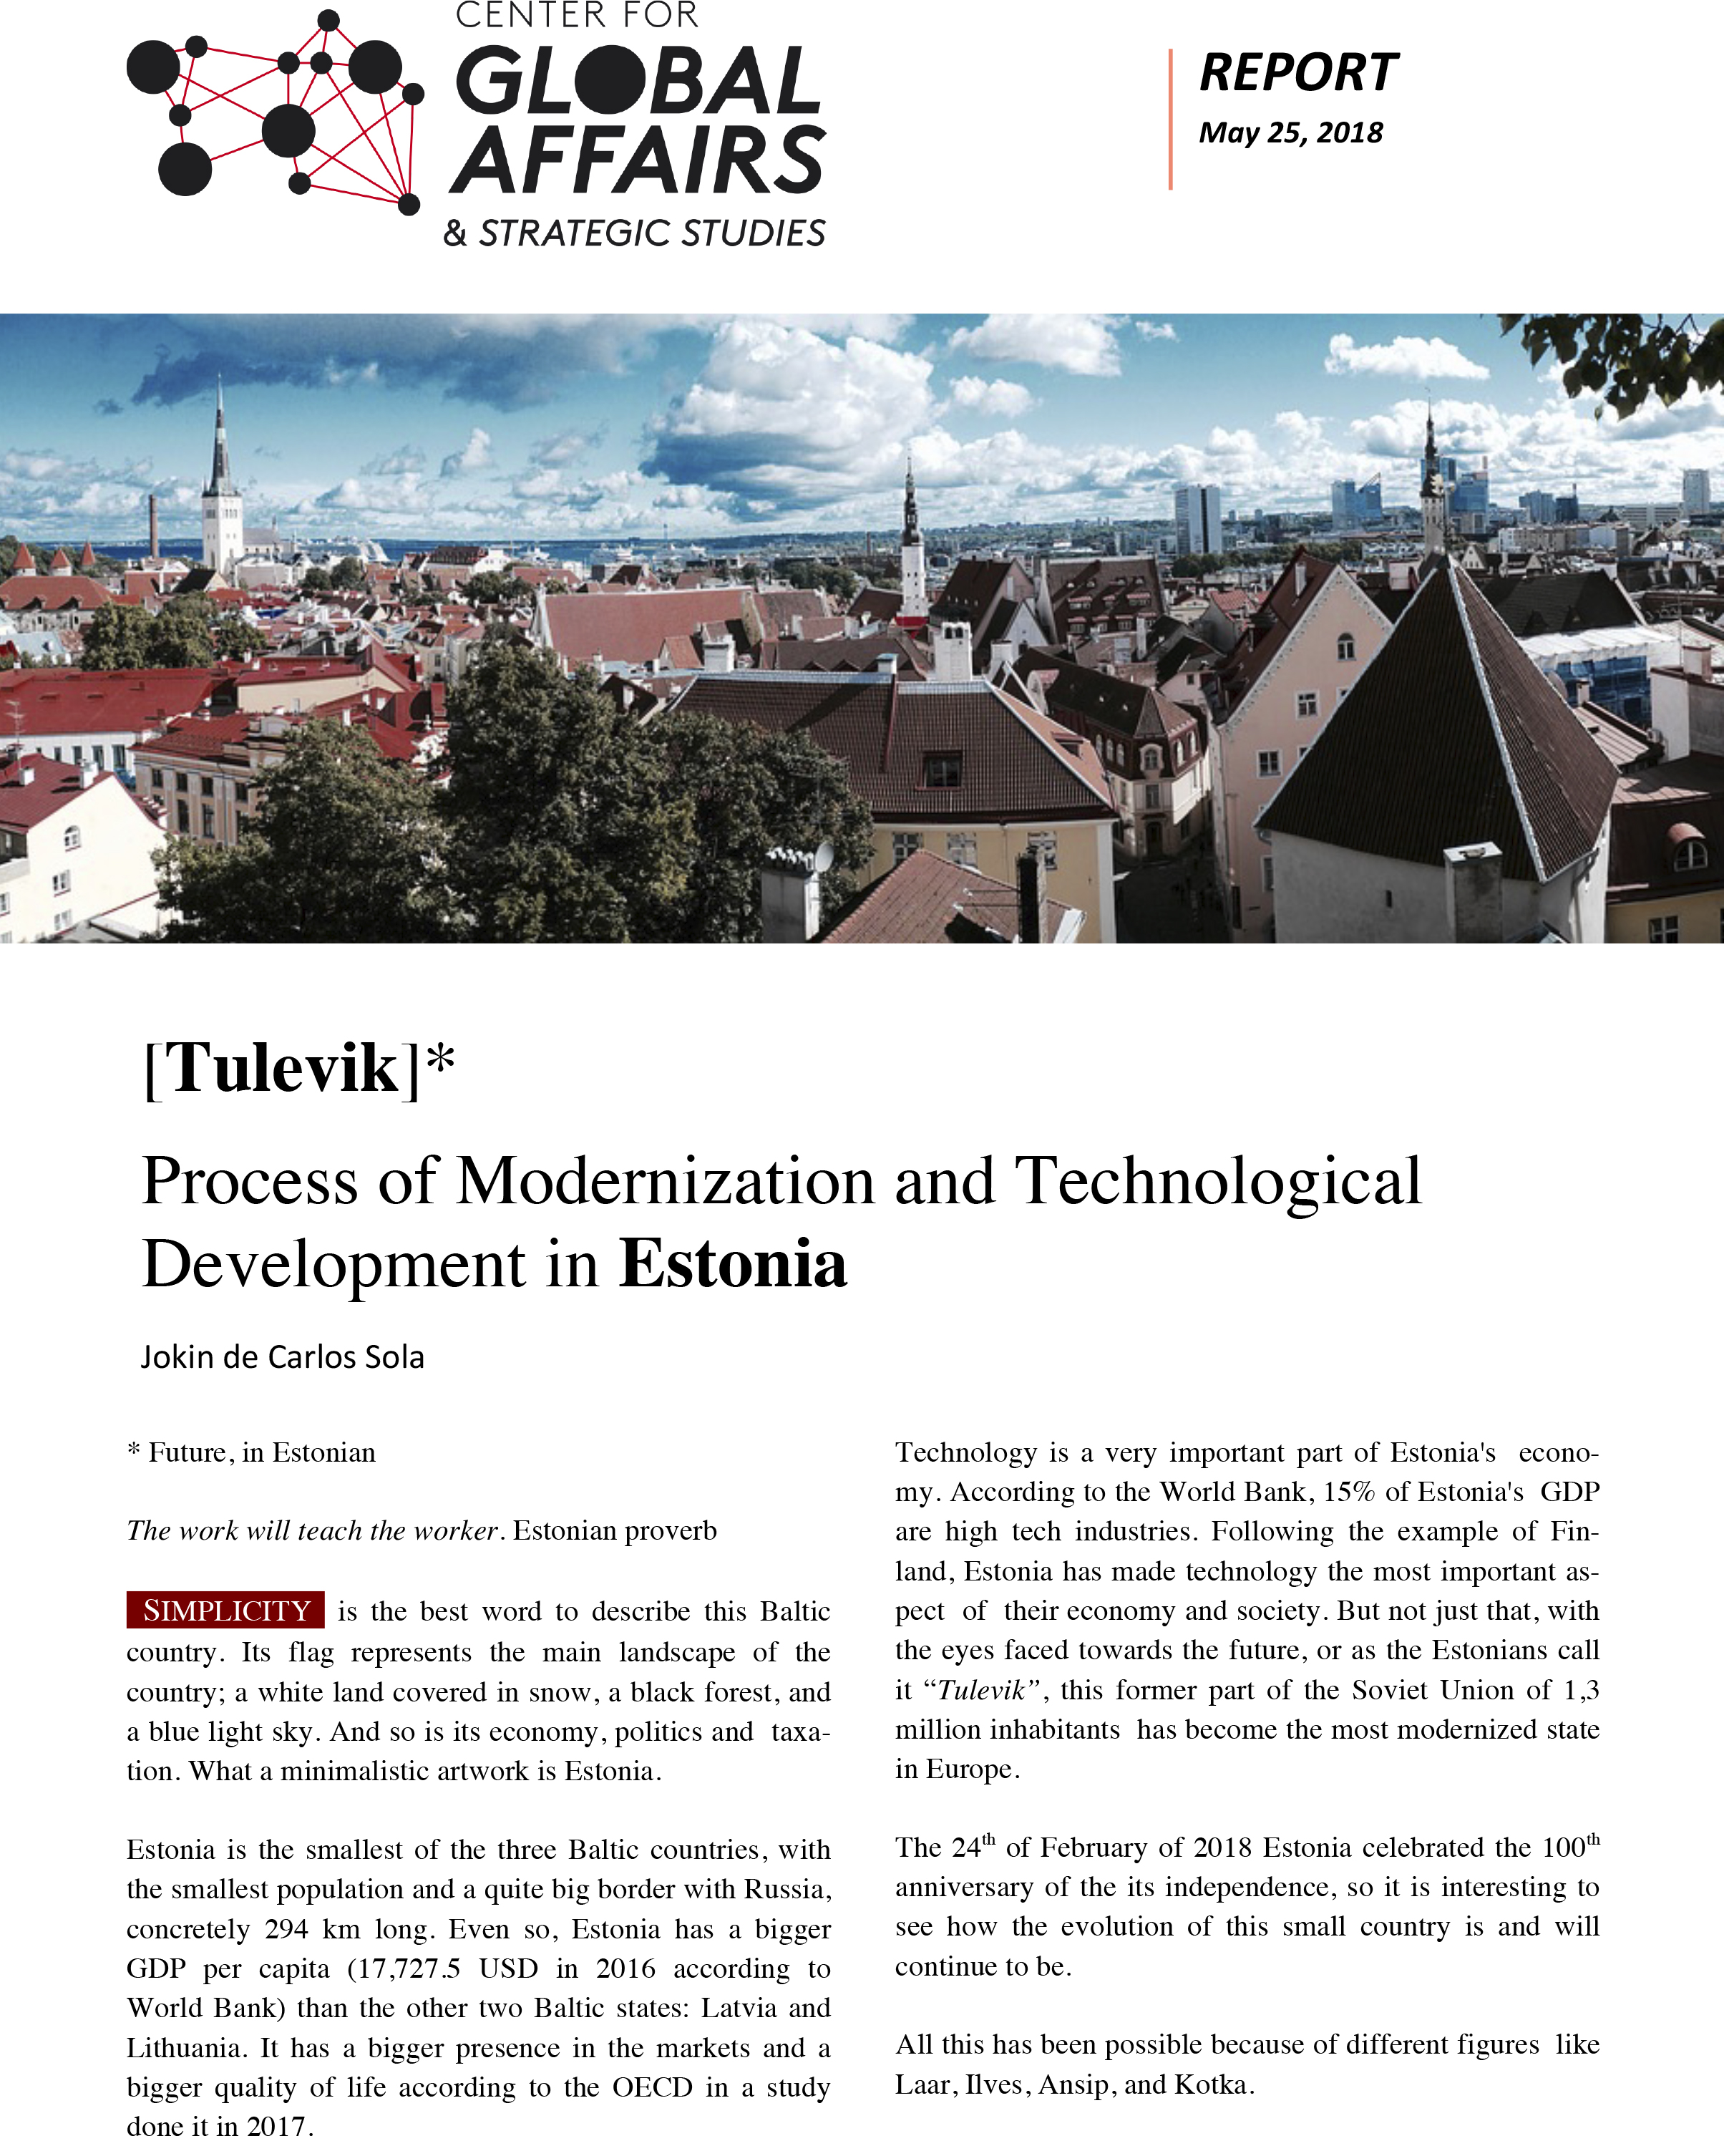 Process of Modernization and Technological Development in Estonia